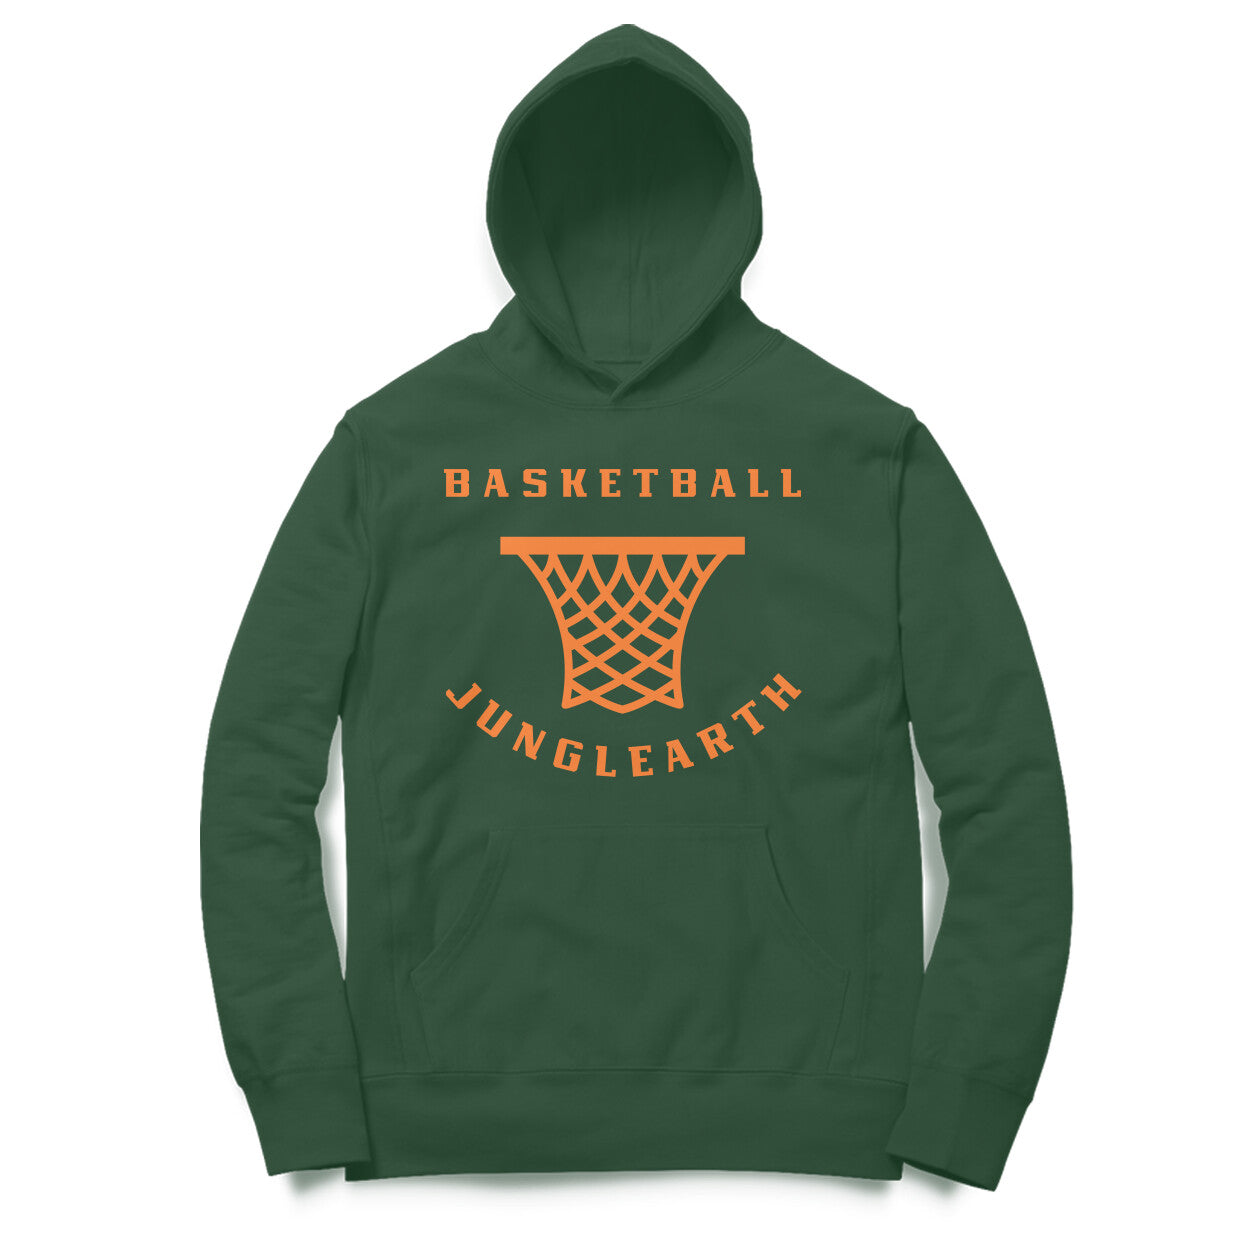 Junglearth Basketball Hoodie